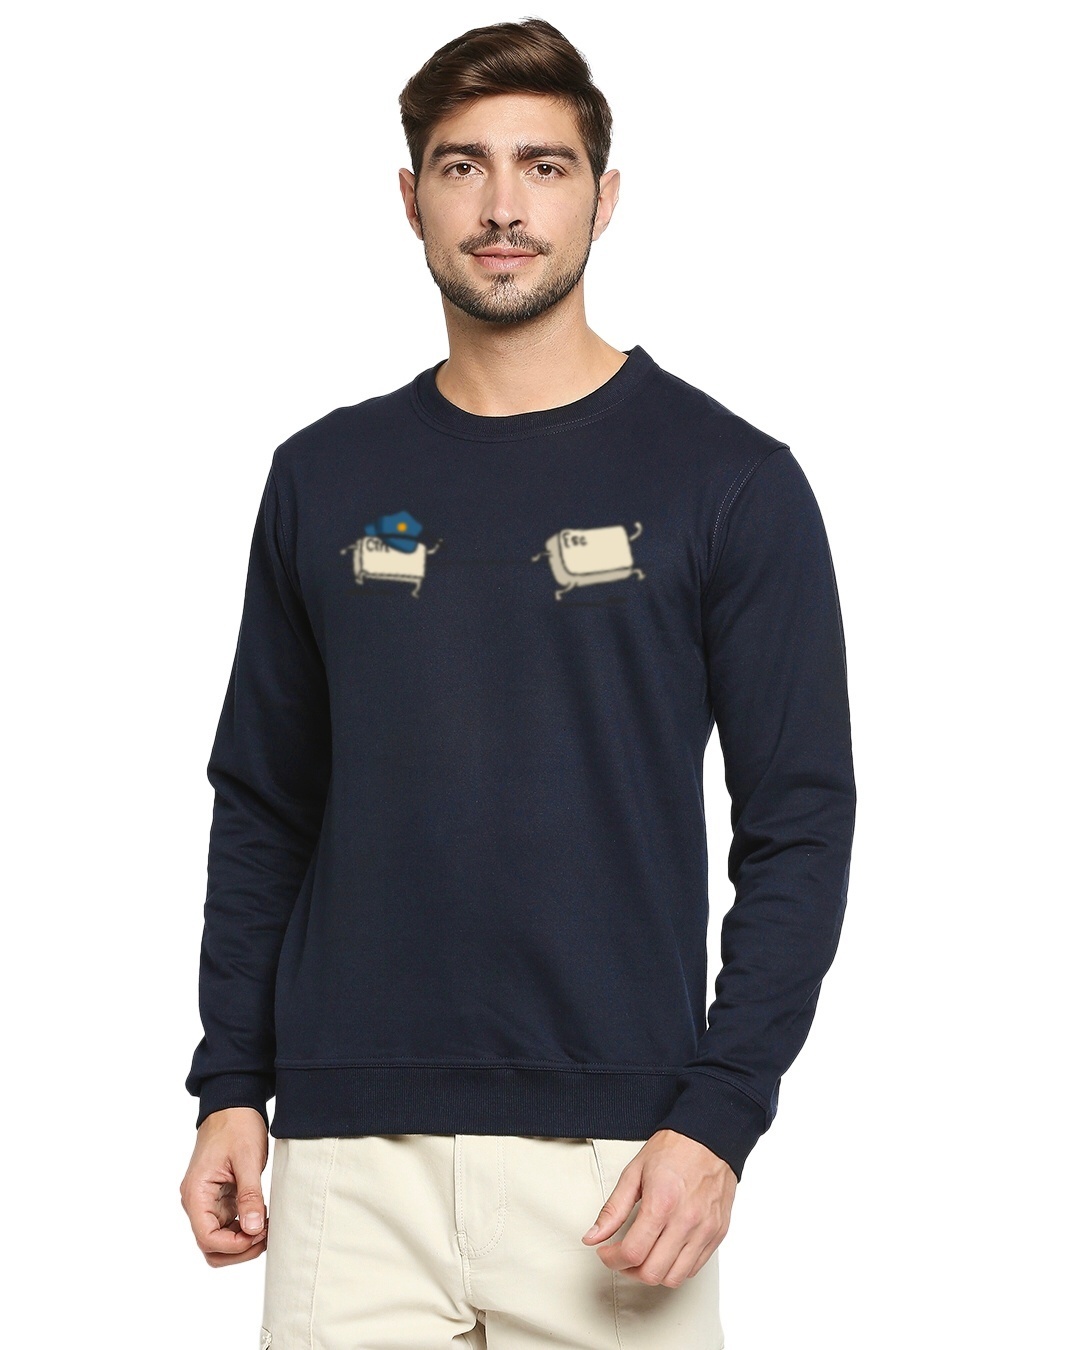 Shop Men's Navy Blue "The Esc Artist"  Sweatshirt-Front